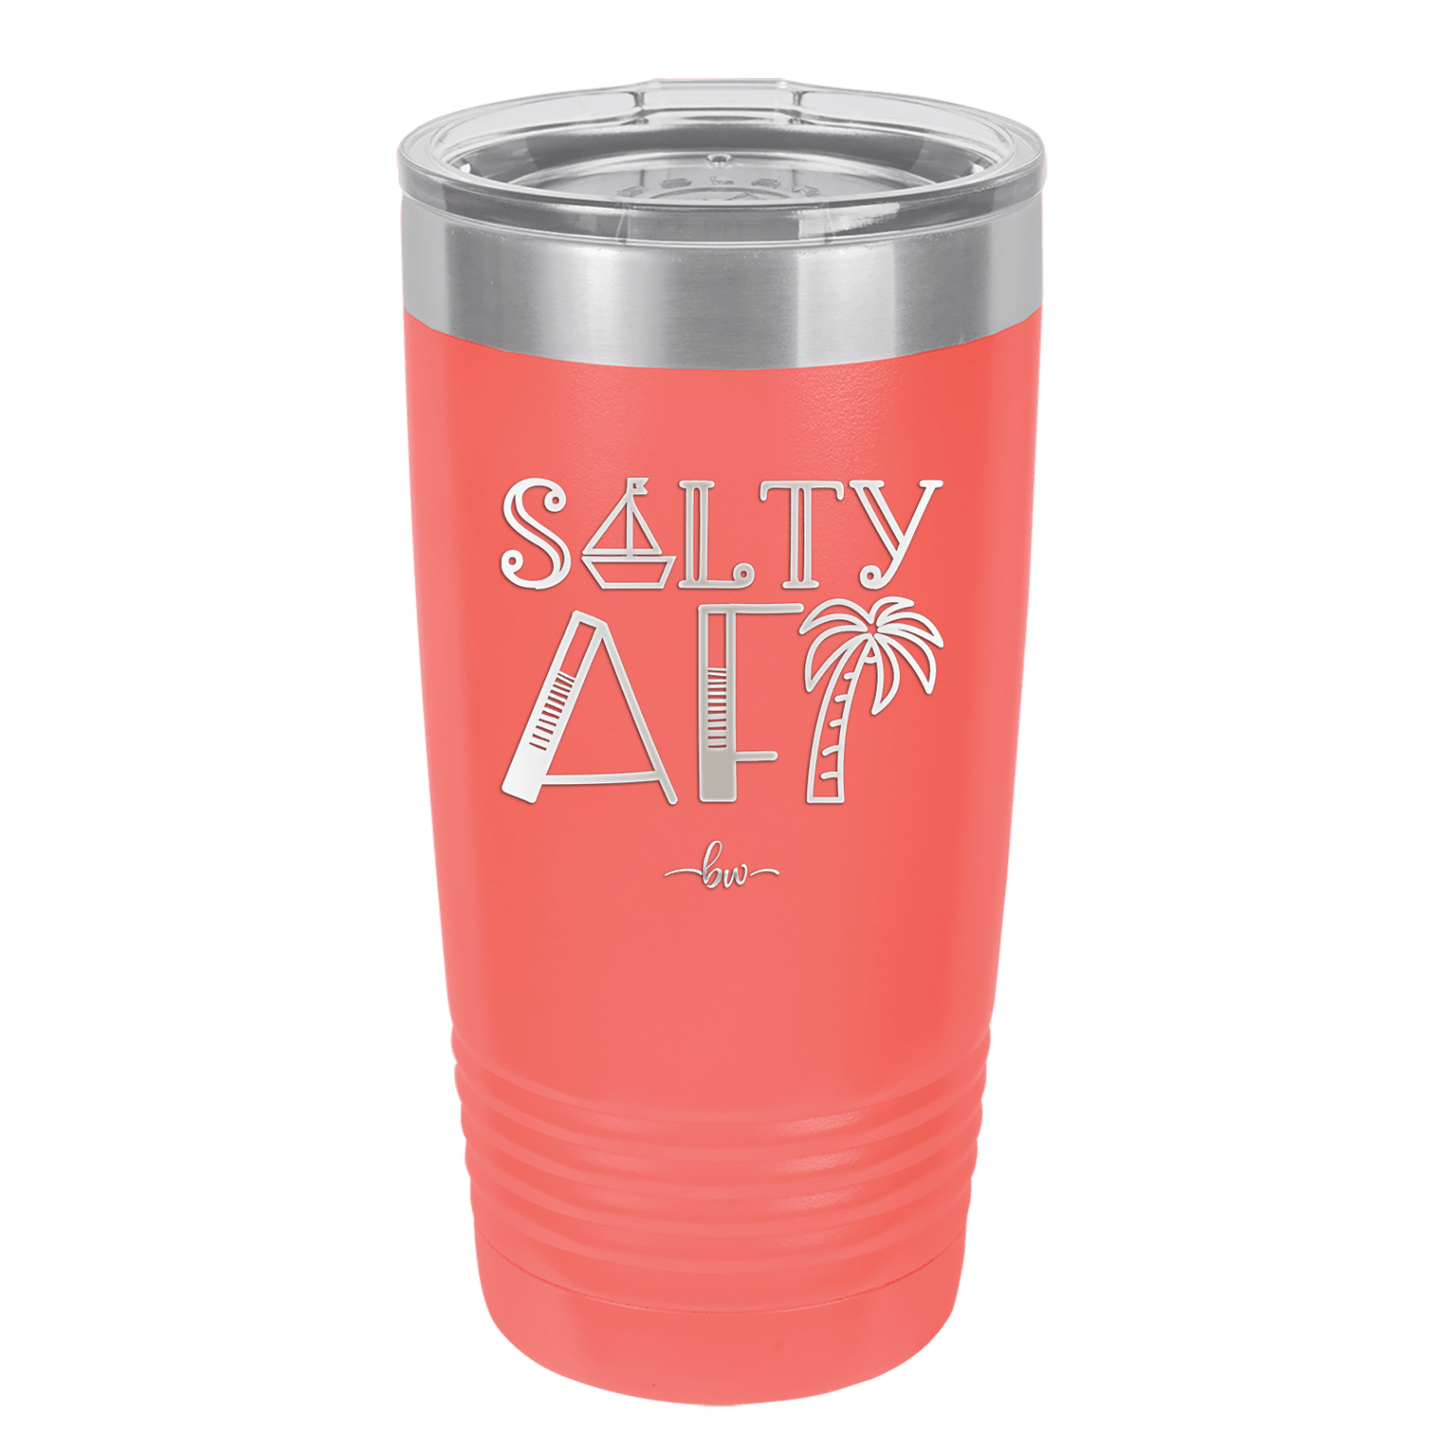 Salty AF 1 - Laser Engraved Stainless Steel Drinkware - 1464 -